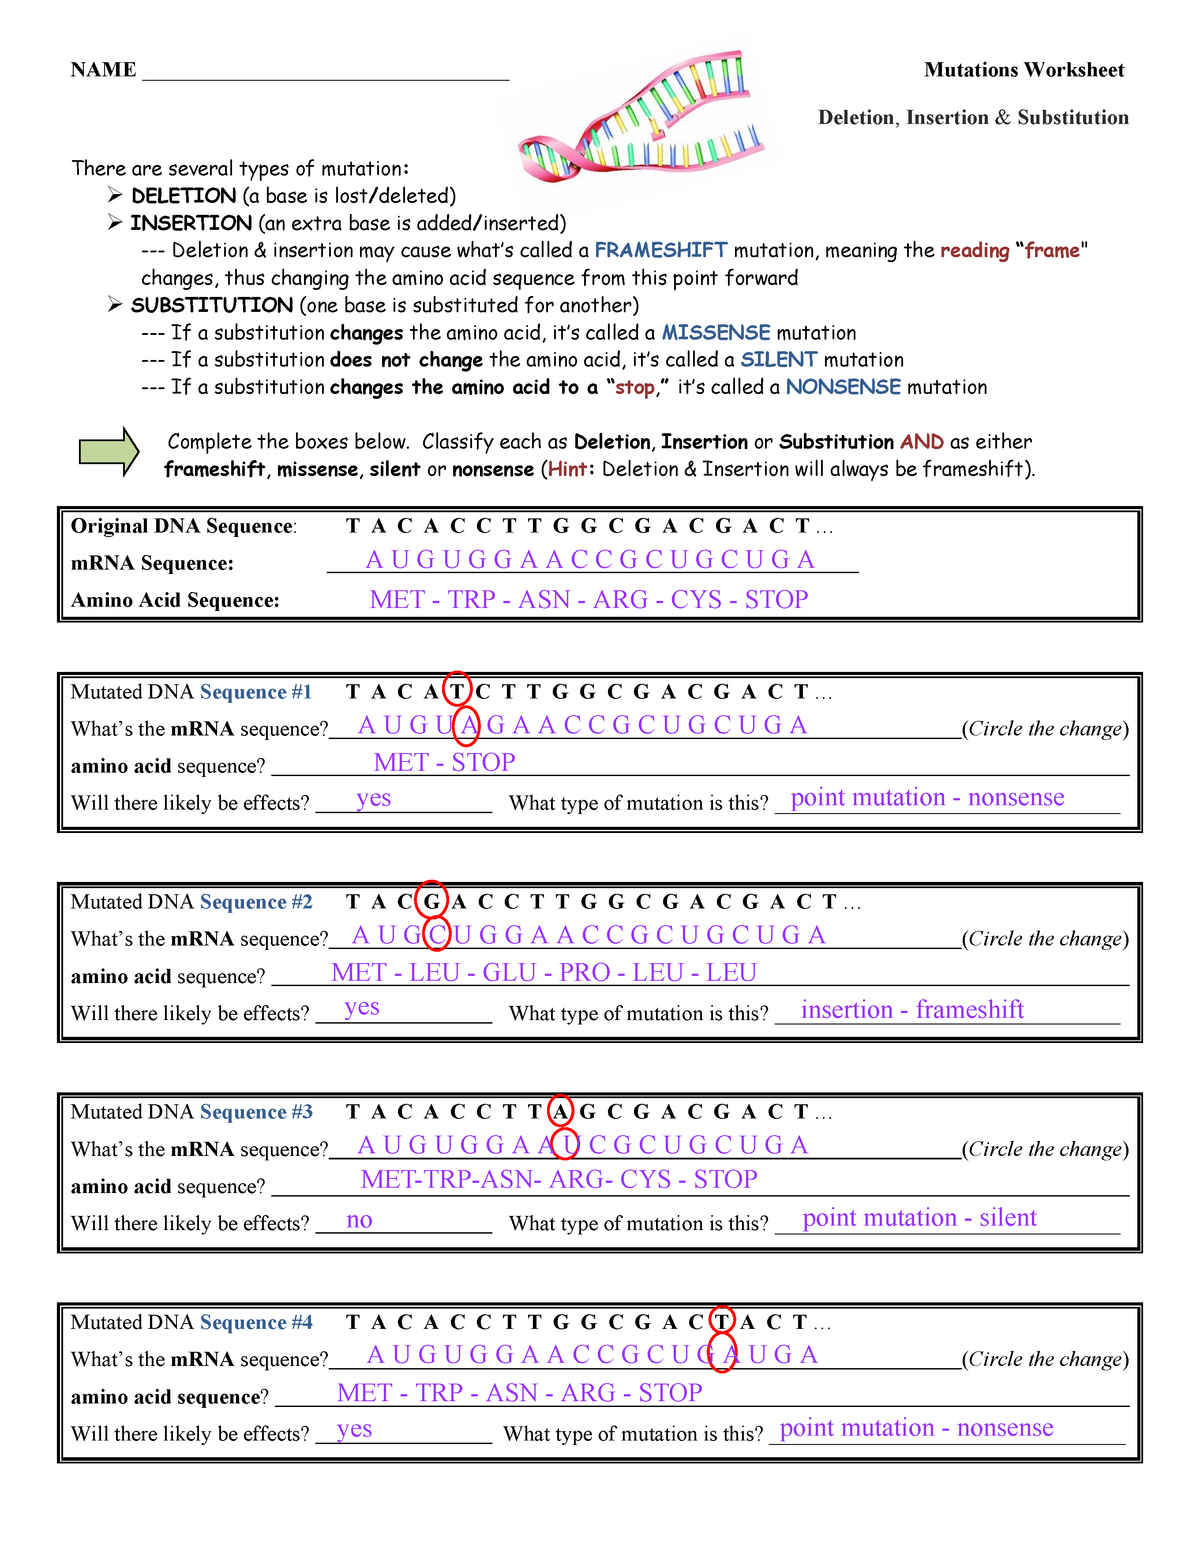 Bio-Worksheet-Mutations - BIOLUA22 - Human Biology - NYU - StuDocu With Genetic Mutation Worksheet Answer Key